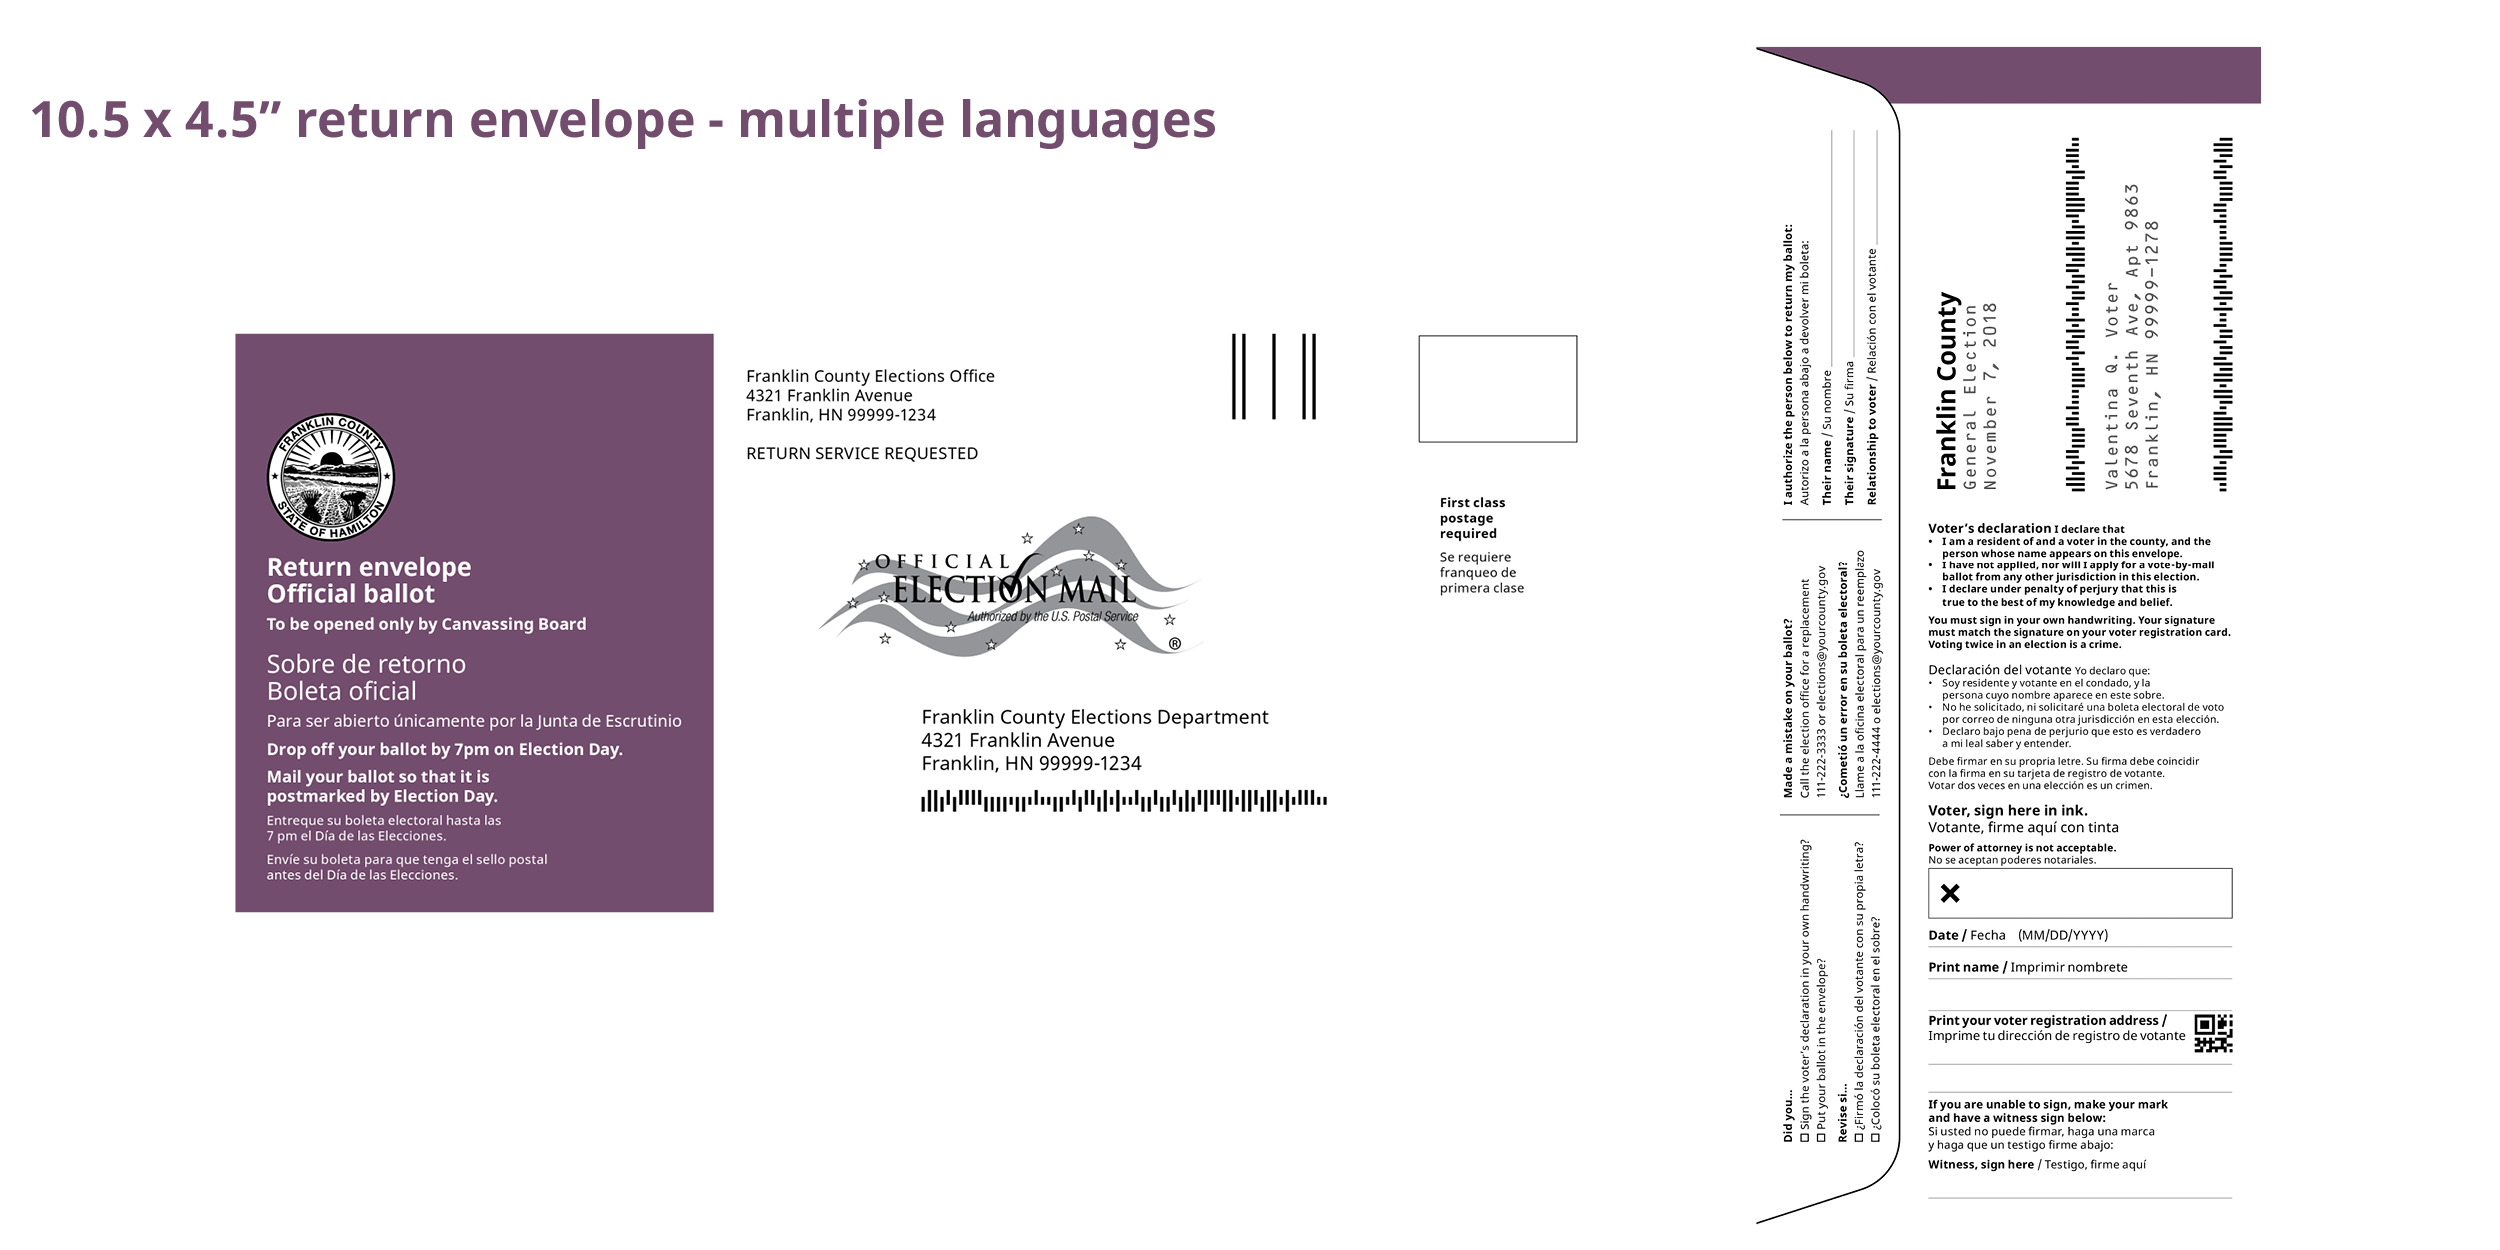 Designing Vote At Home Envelopes And Materials Center For Civic Design